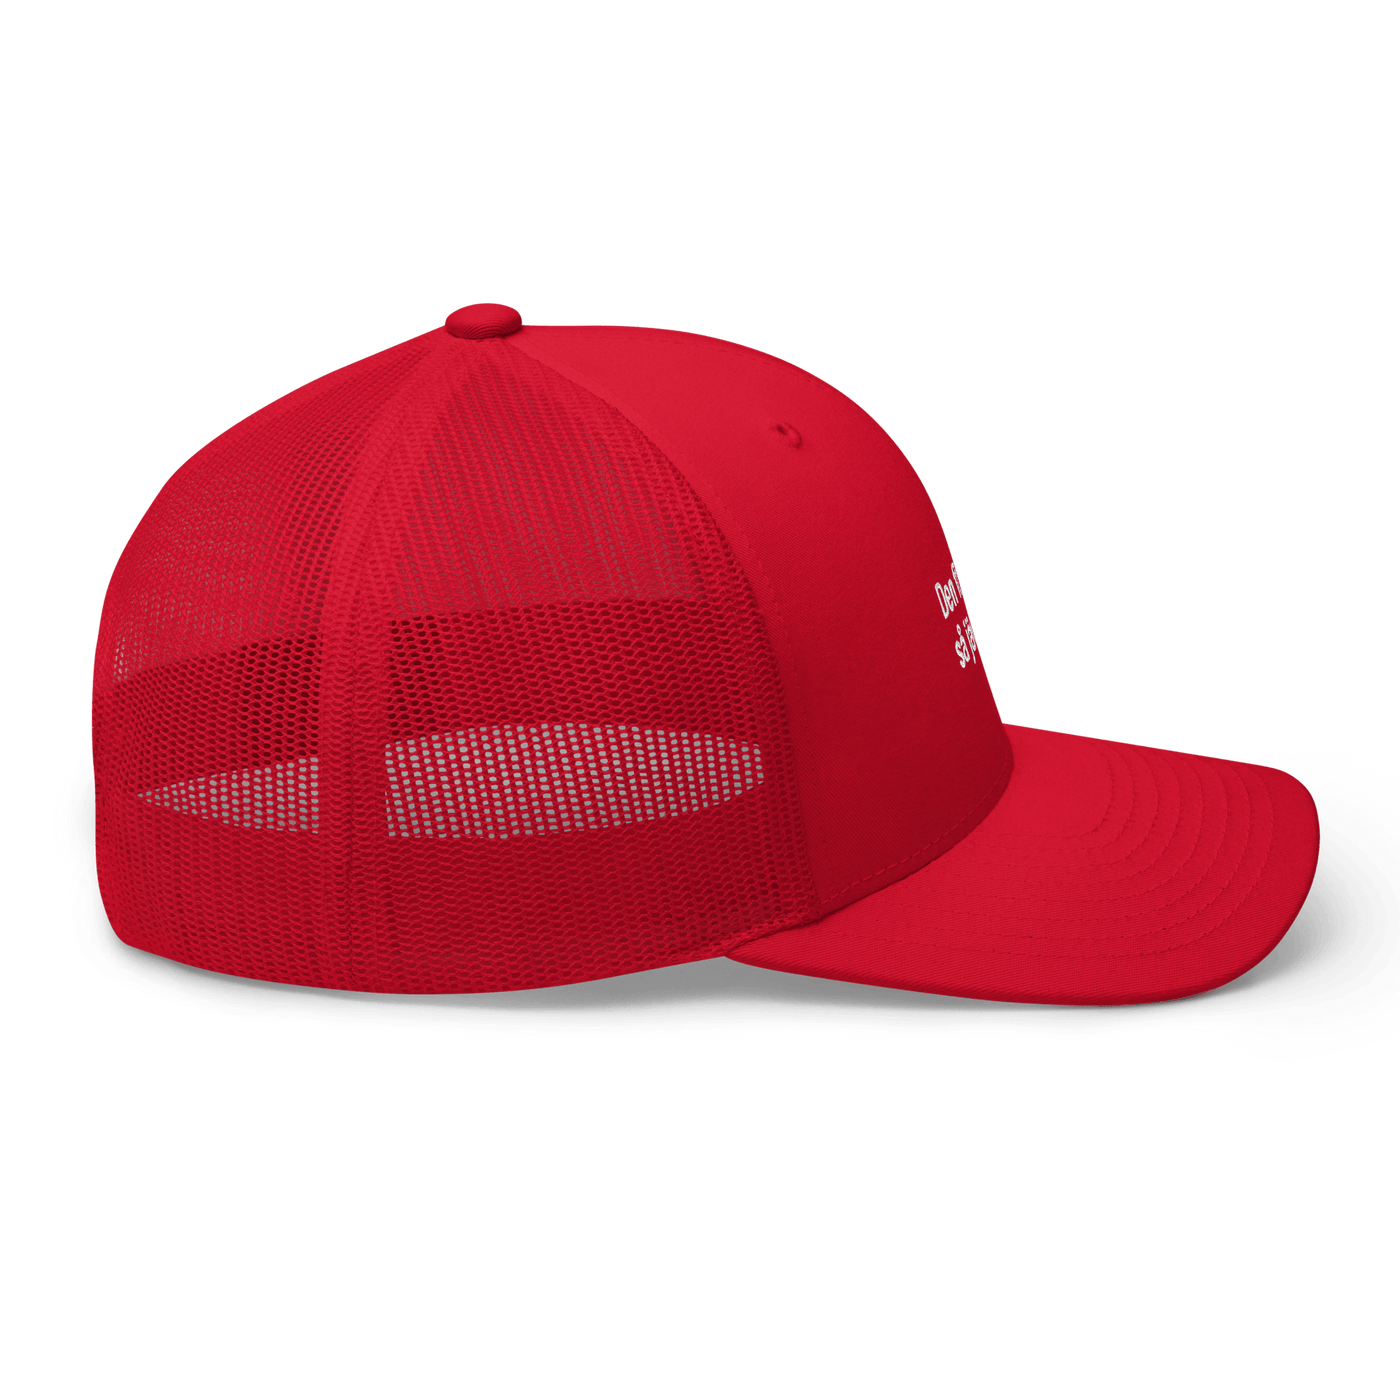 Den första Trucker Cap - Red - - Just Another Cap Store